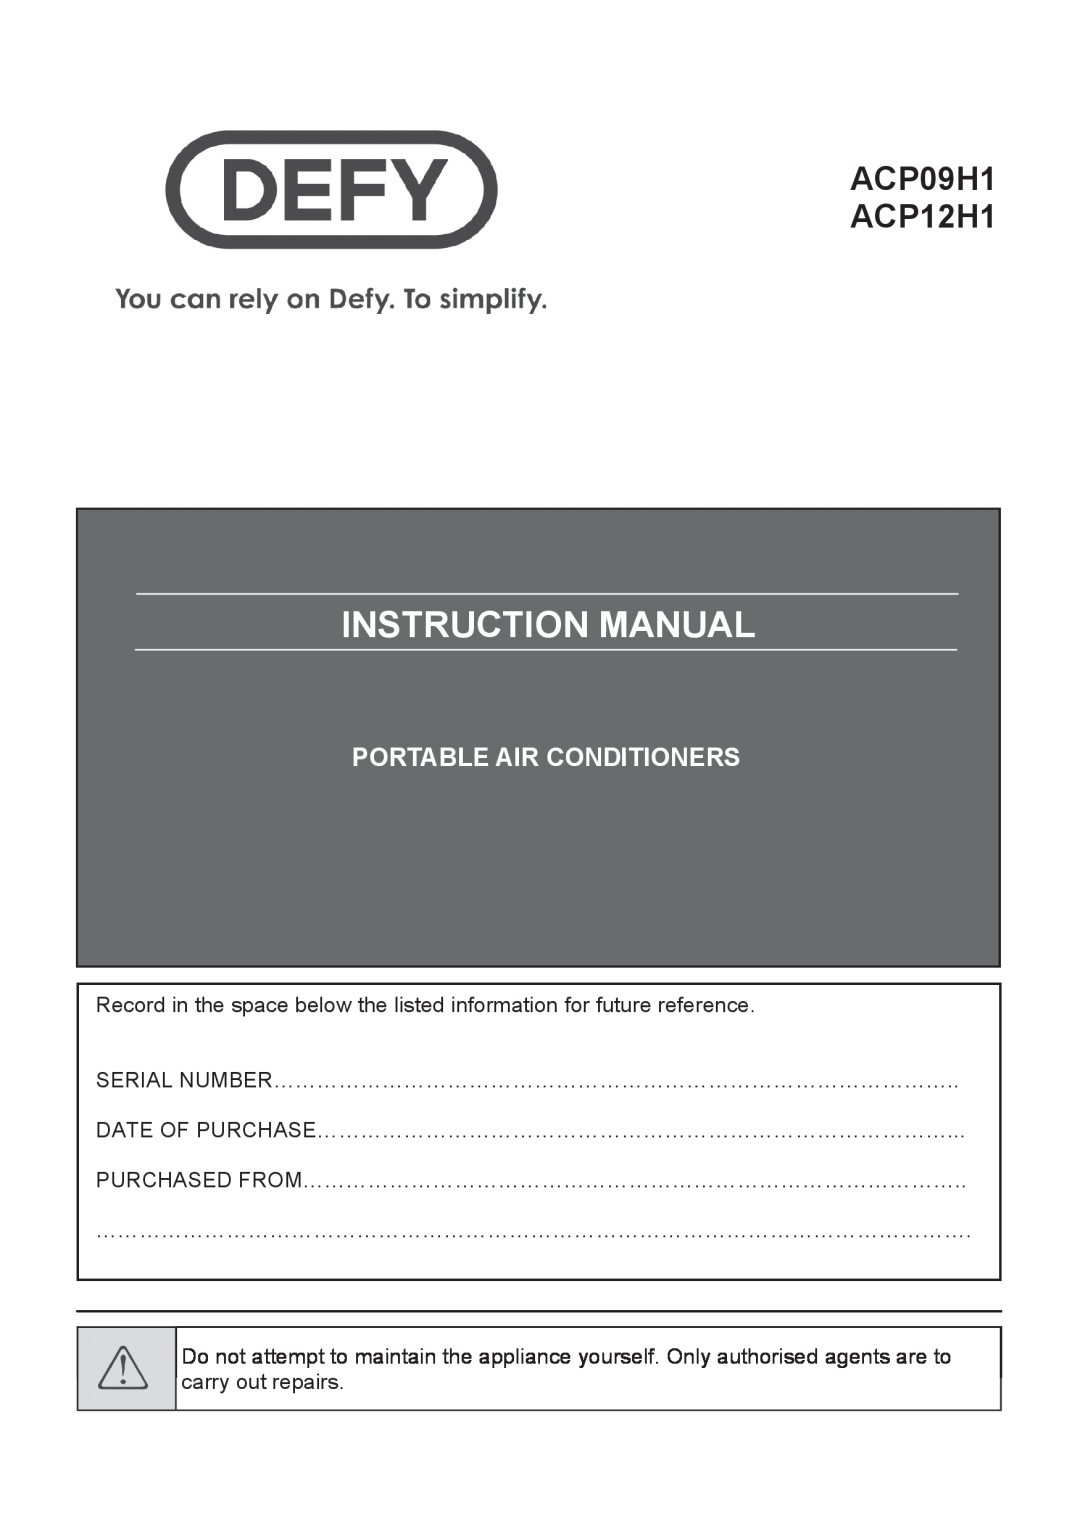 Defy Appliances ACP12H1, ACP09H1 manual #$%, $%& # 